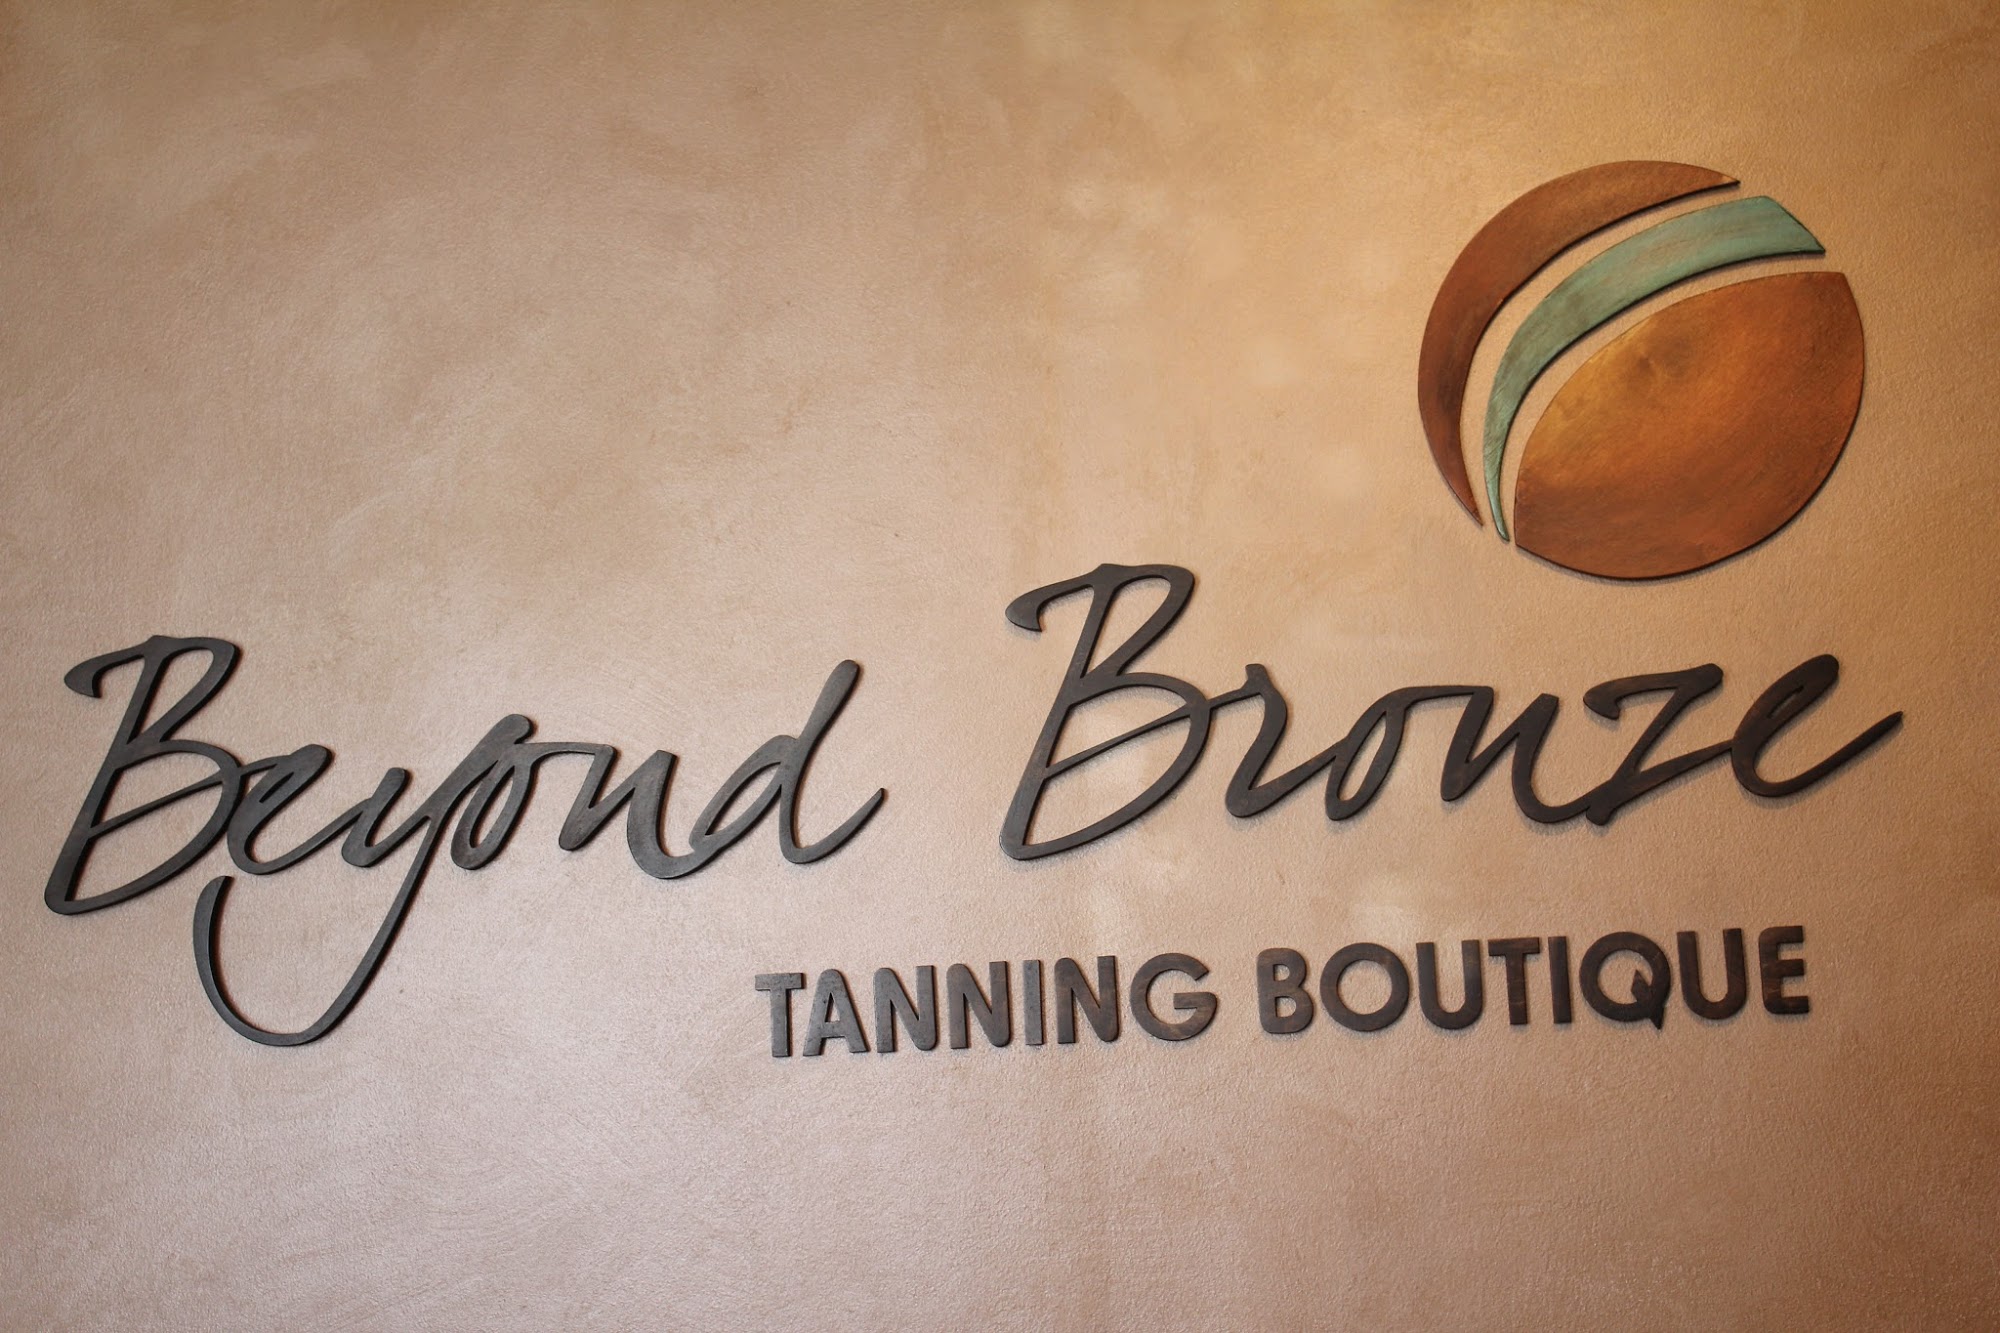 Beyond Bronze Tanning Boutique